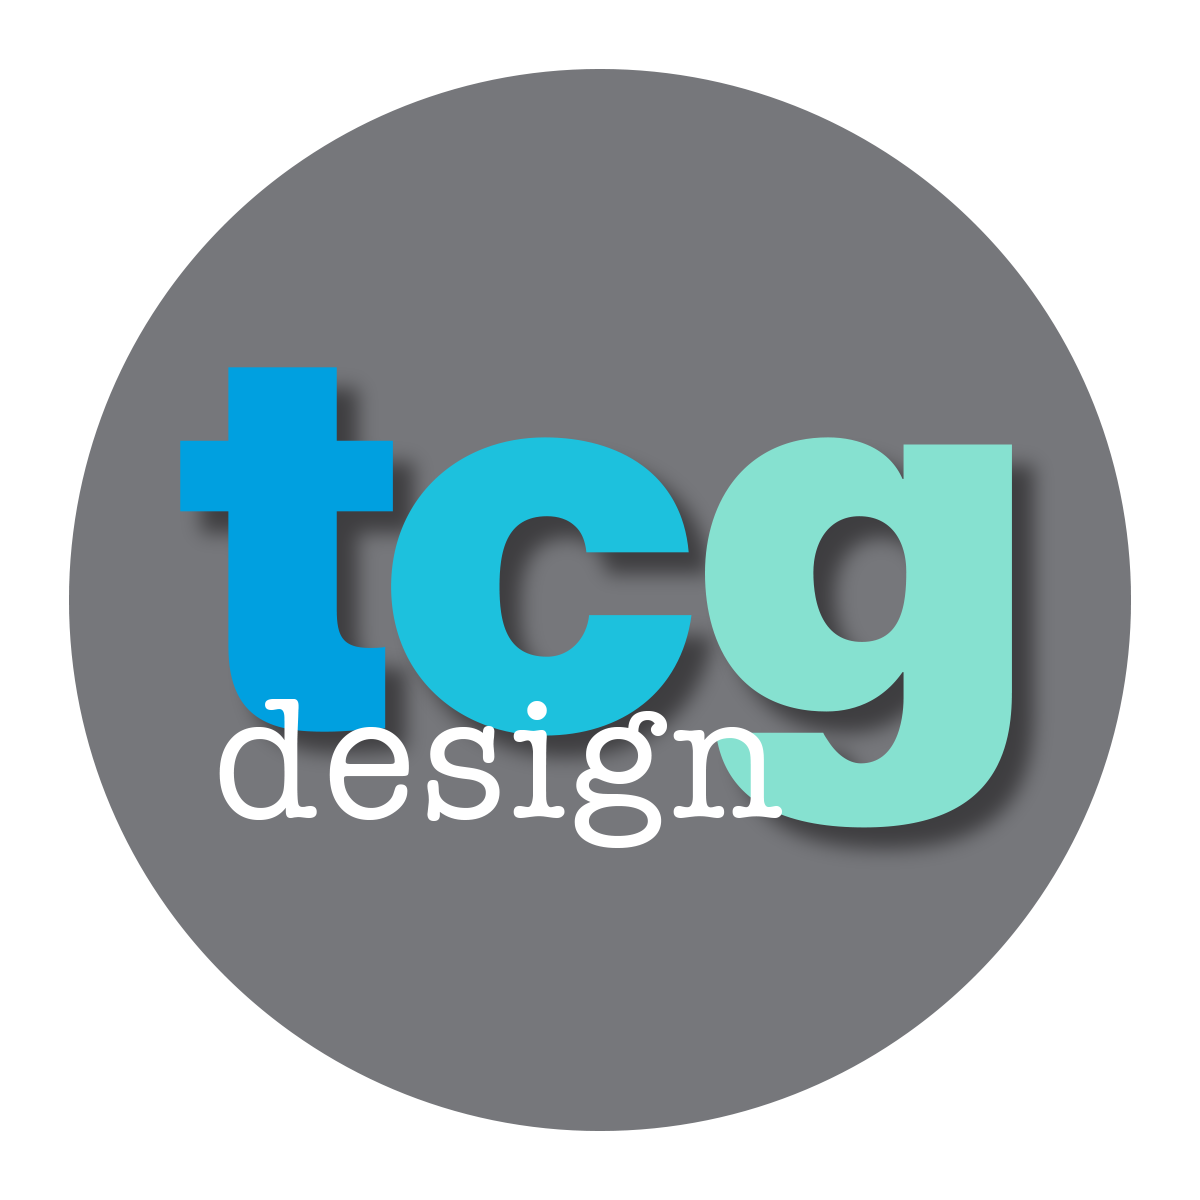 TCG Design